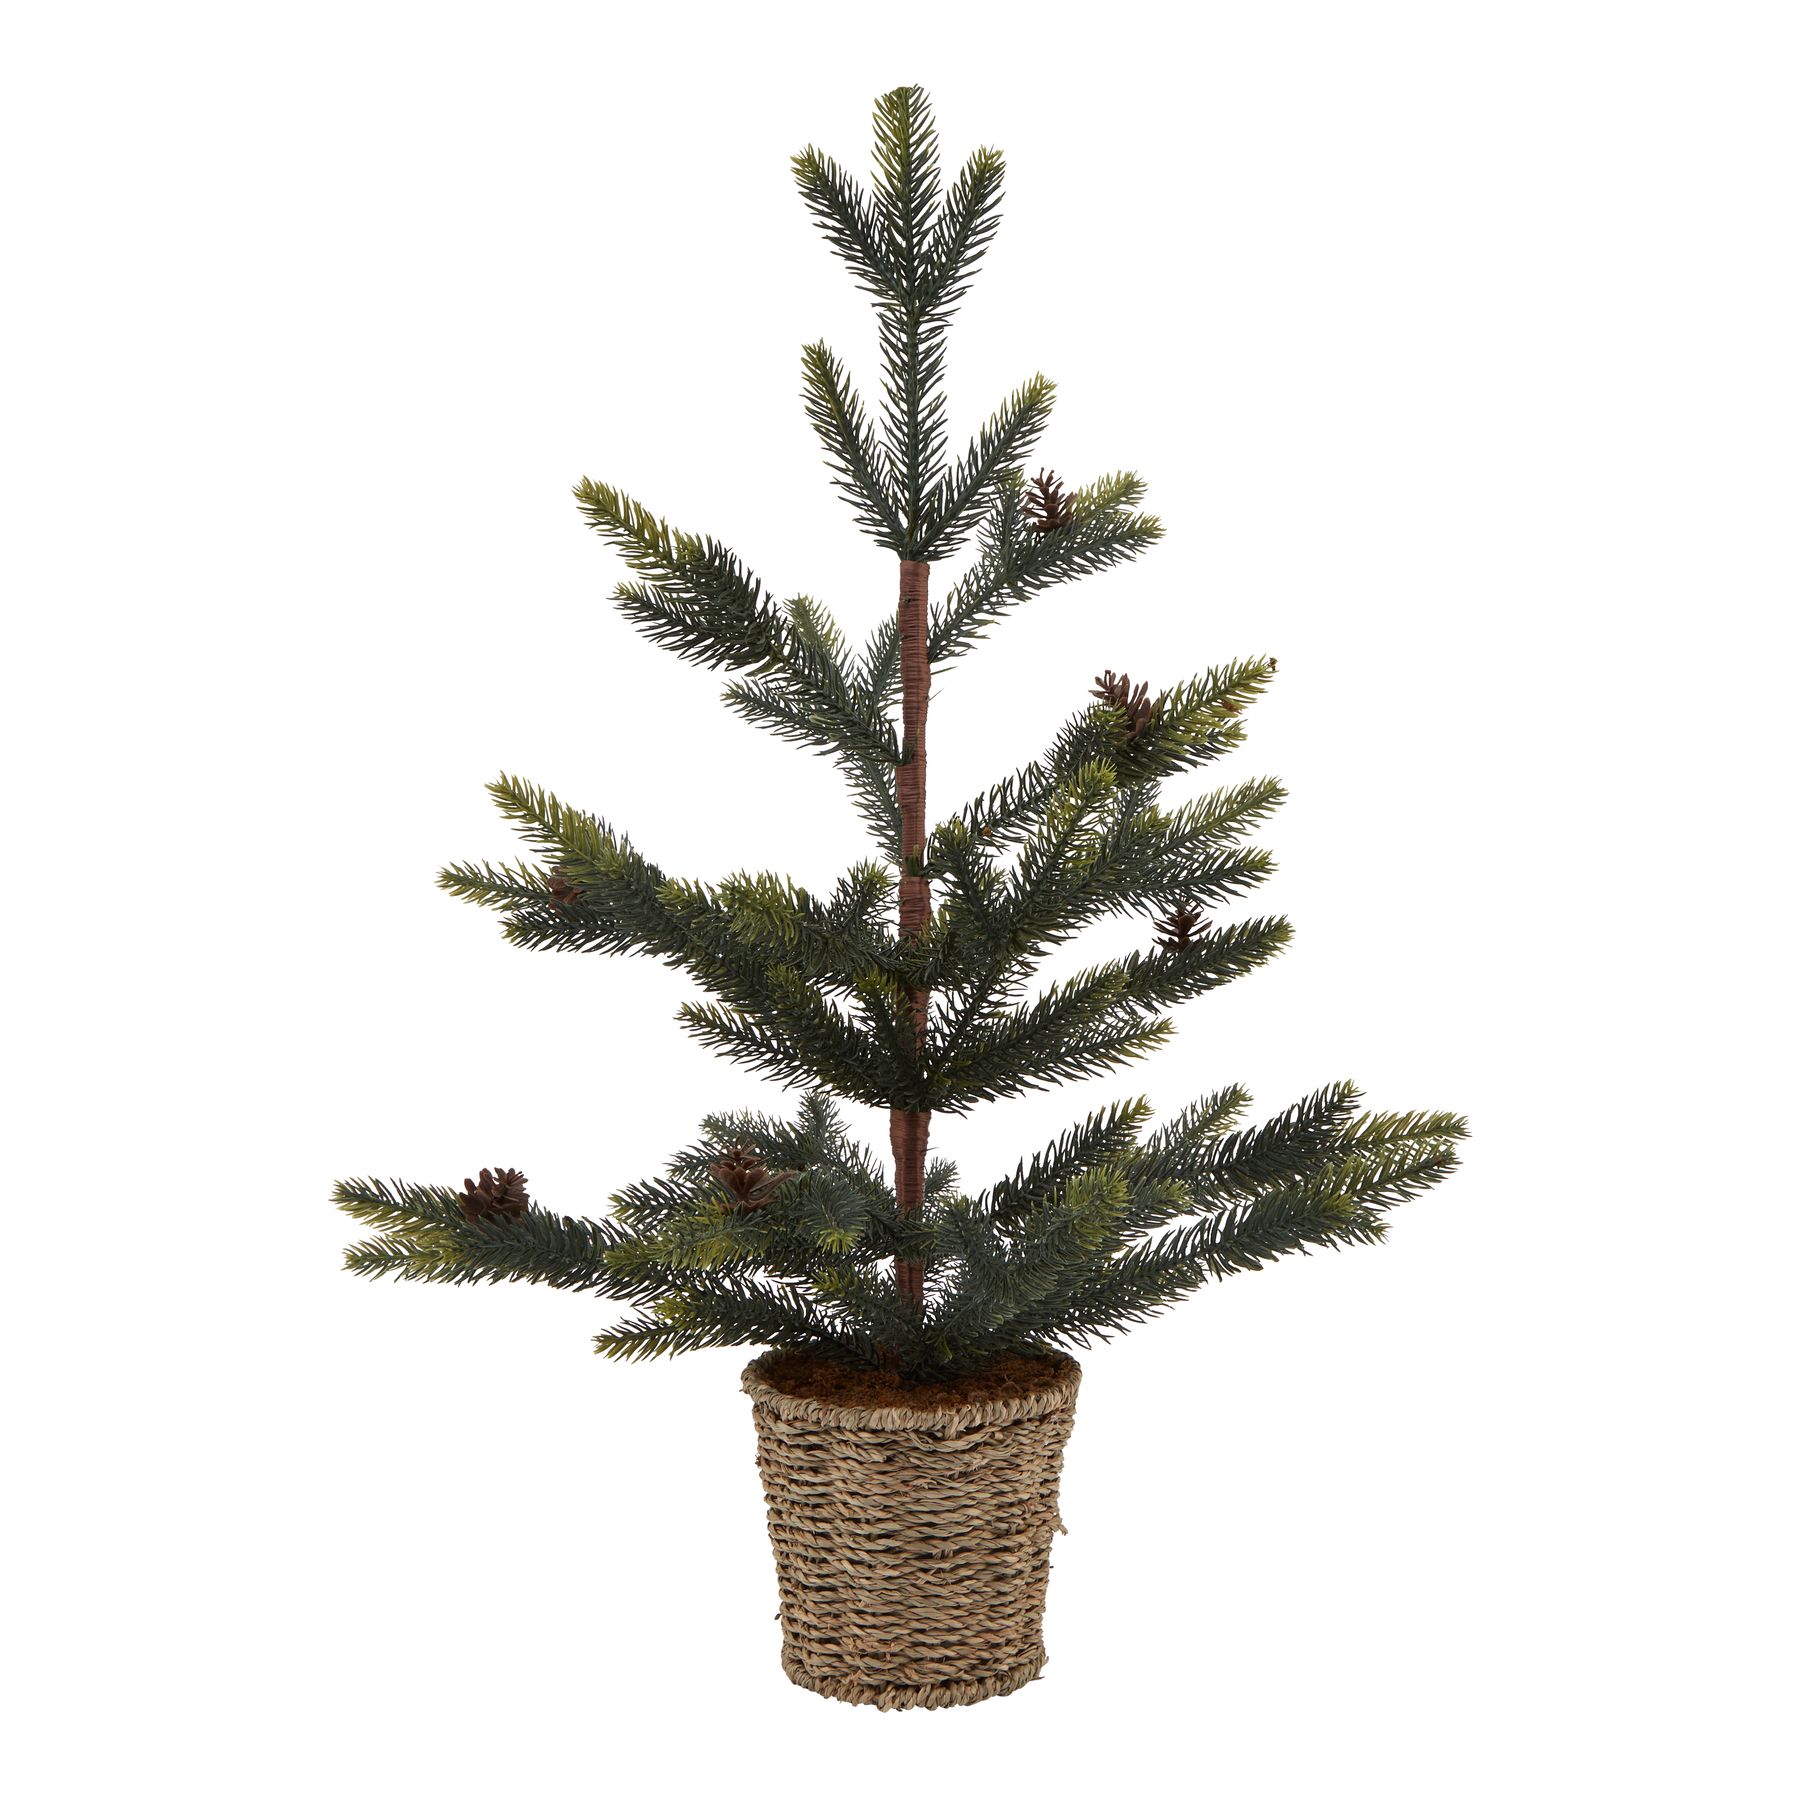 Medium Spruce Tree With Wicker Basket - Image 1